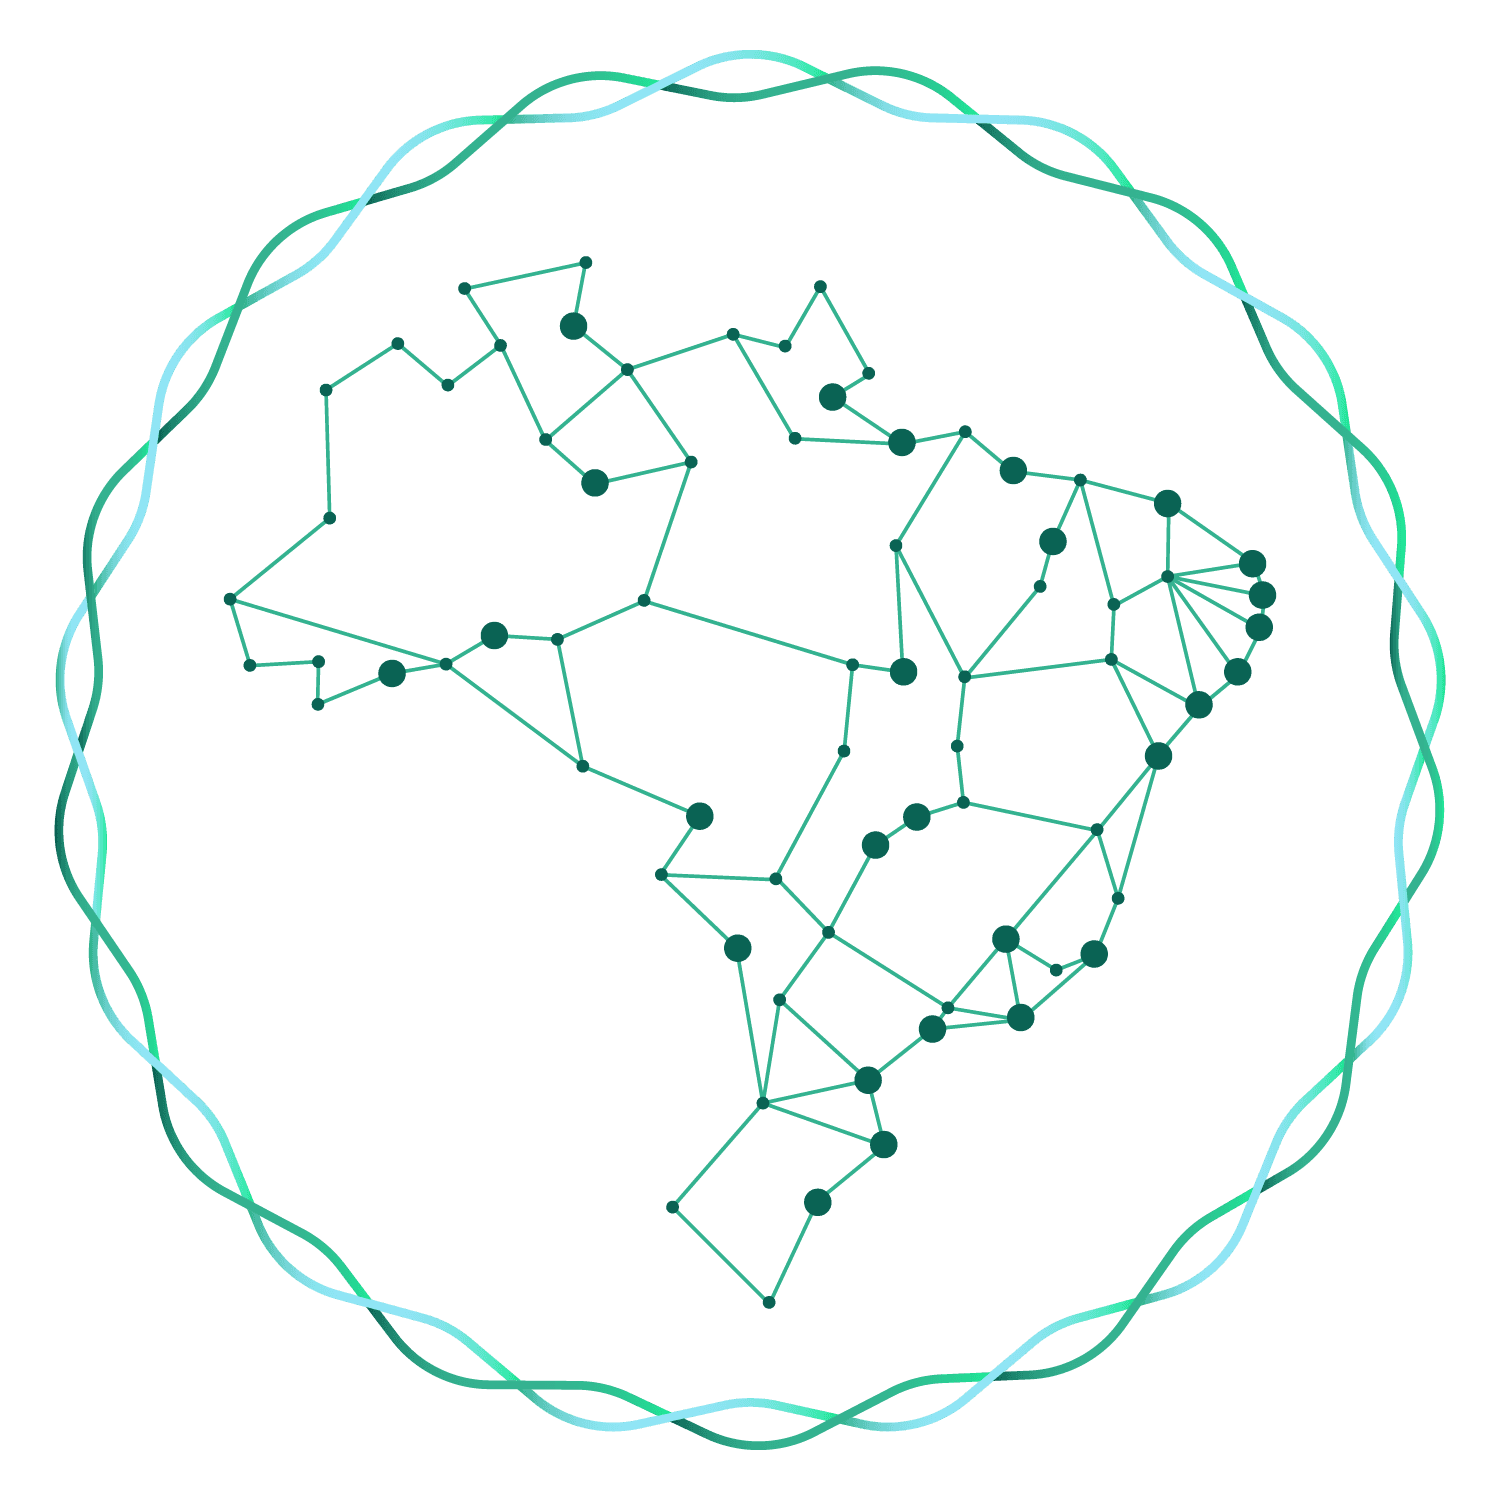 genomic network symbol